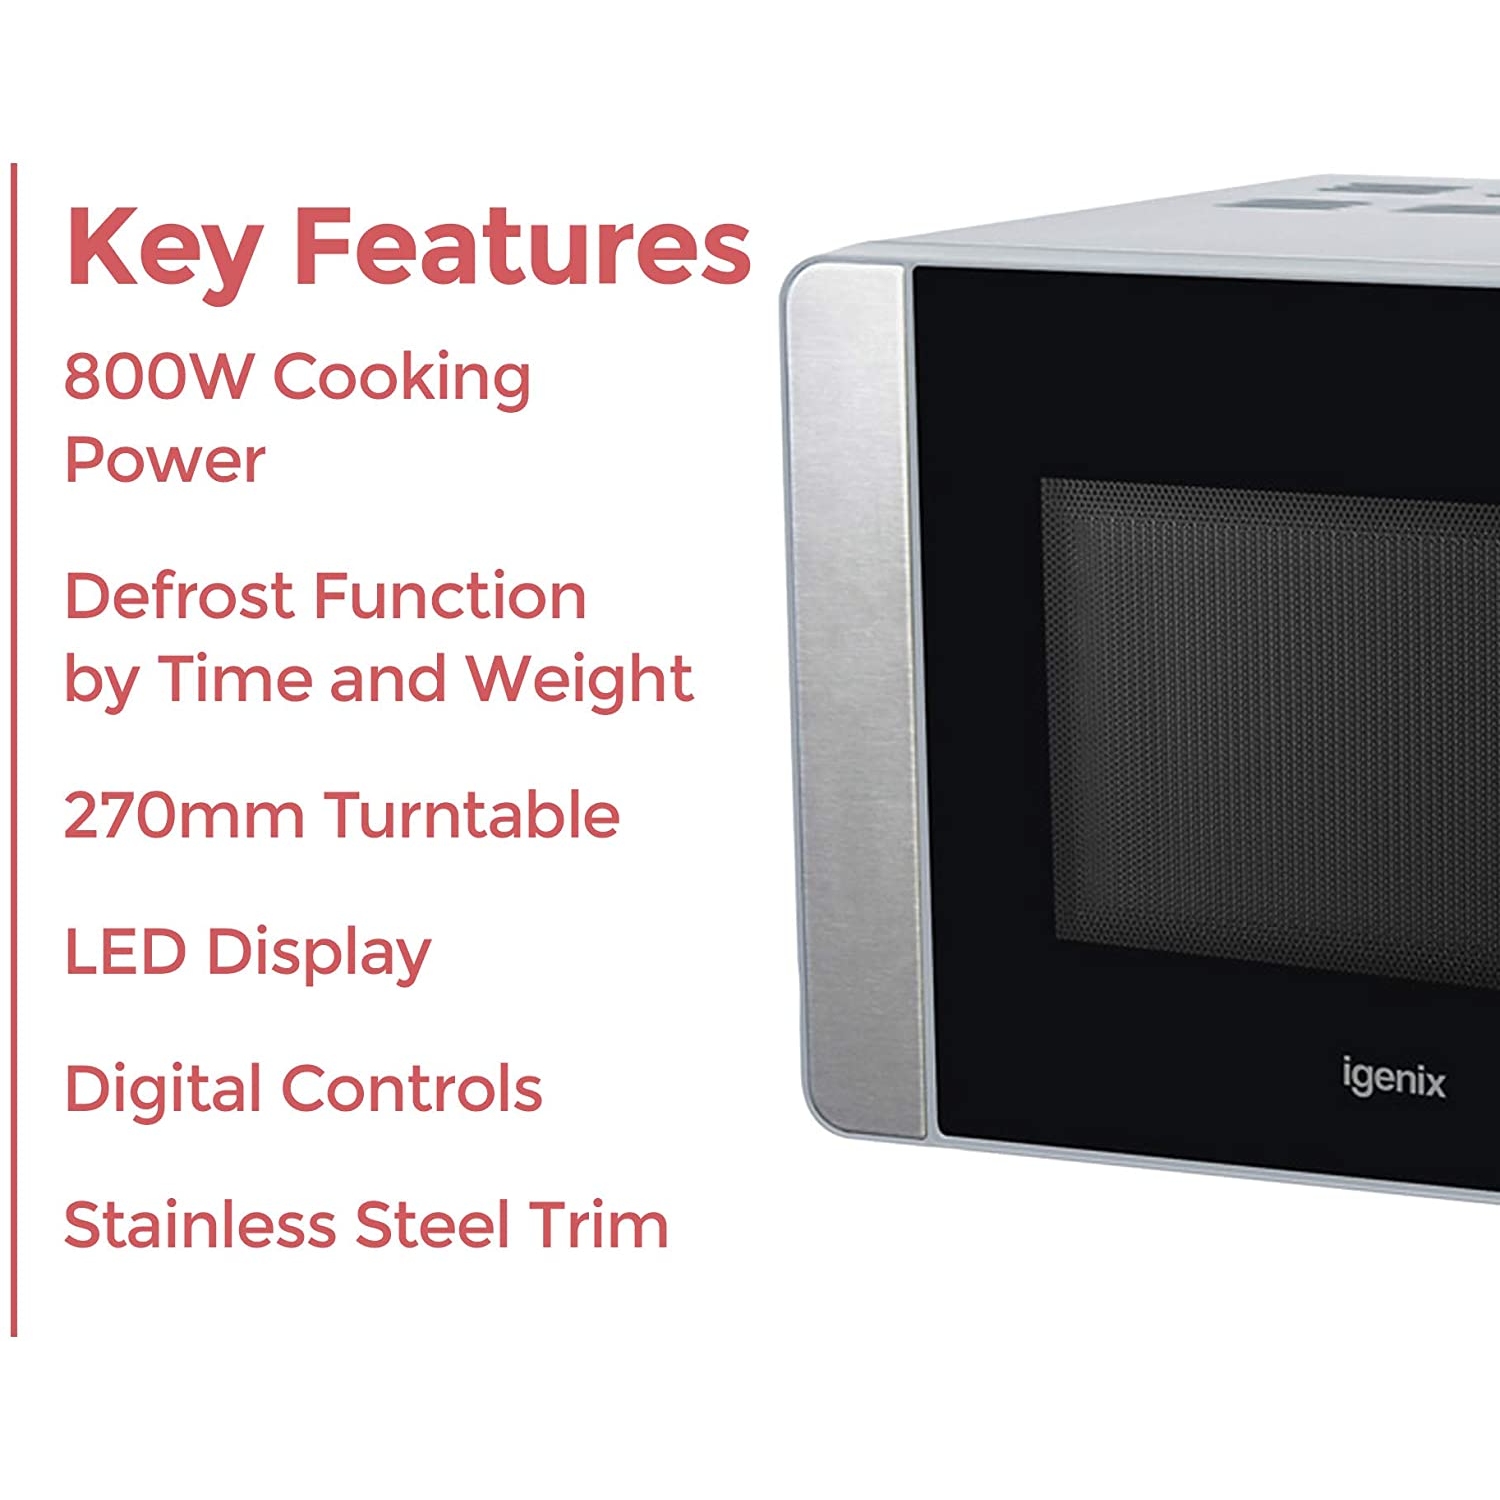 Igenix stainless steel 20L microwave - 1